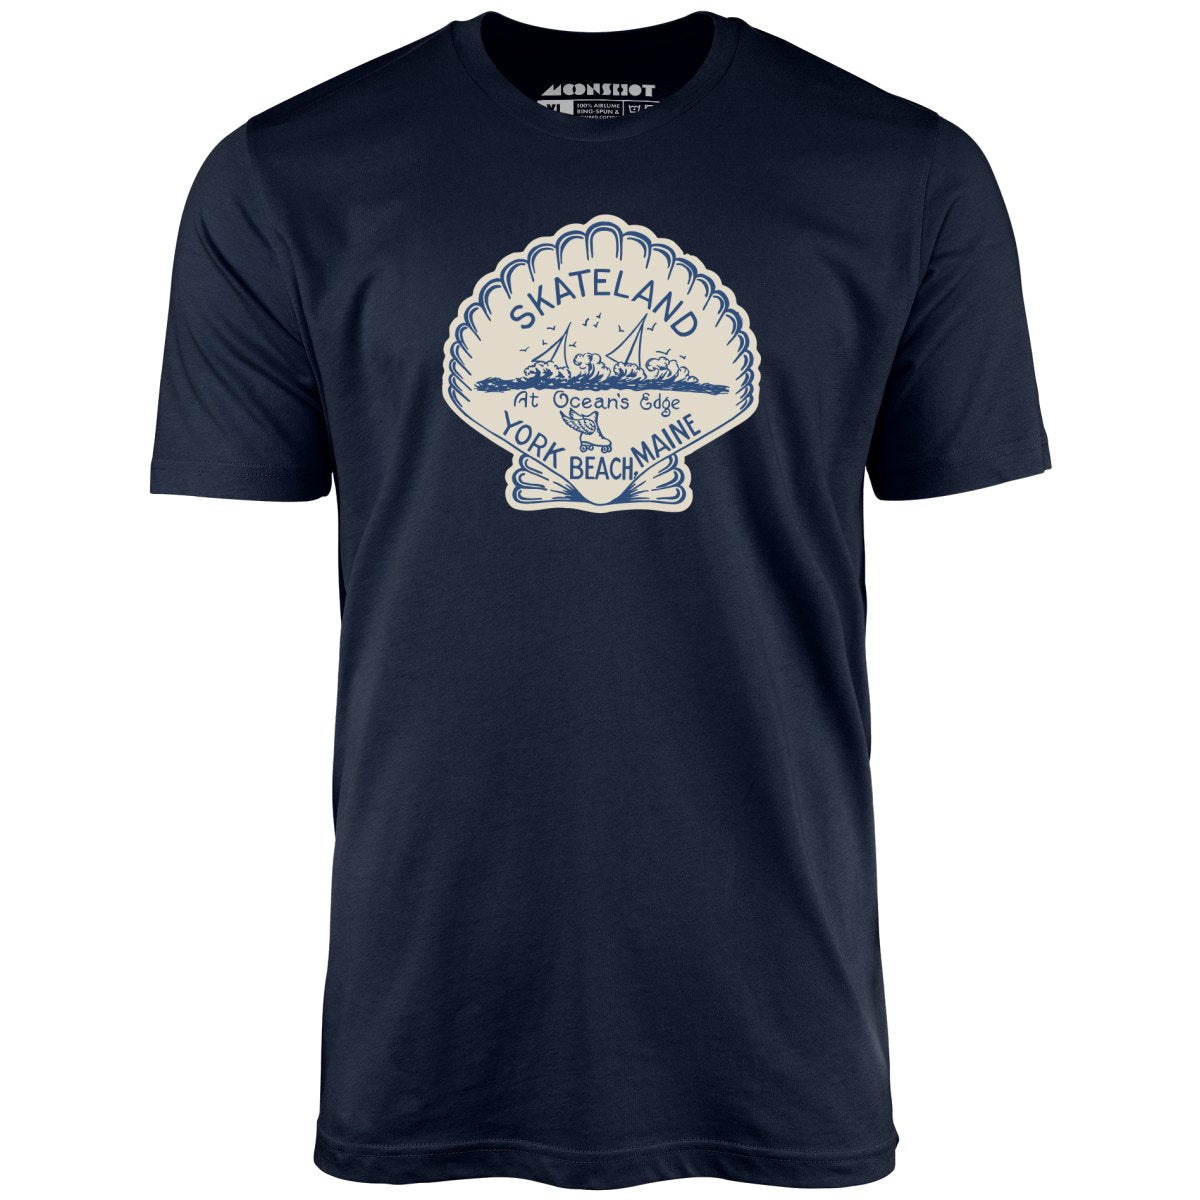 Skateland - York Beach, ME - Vintage Roller Rink - Unisex T-Shirt